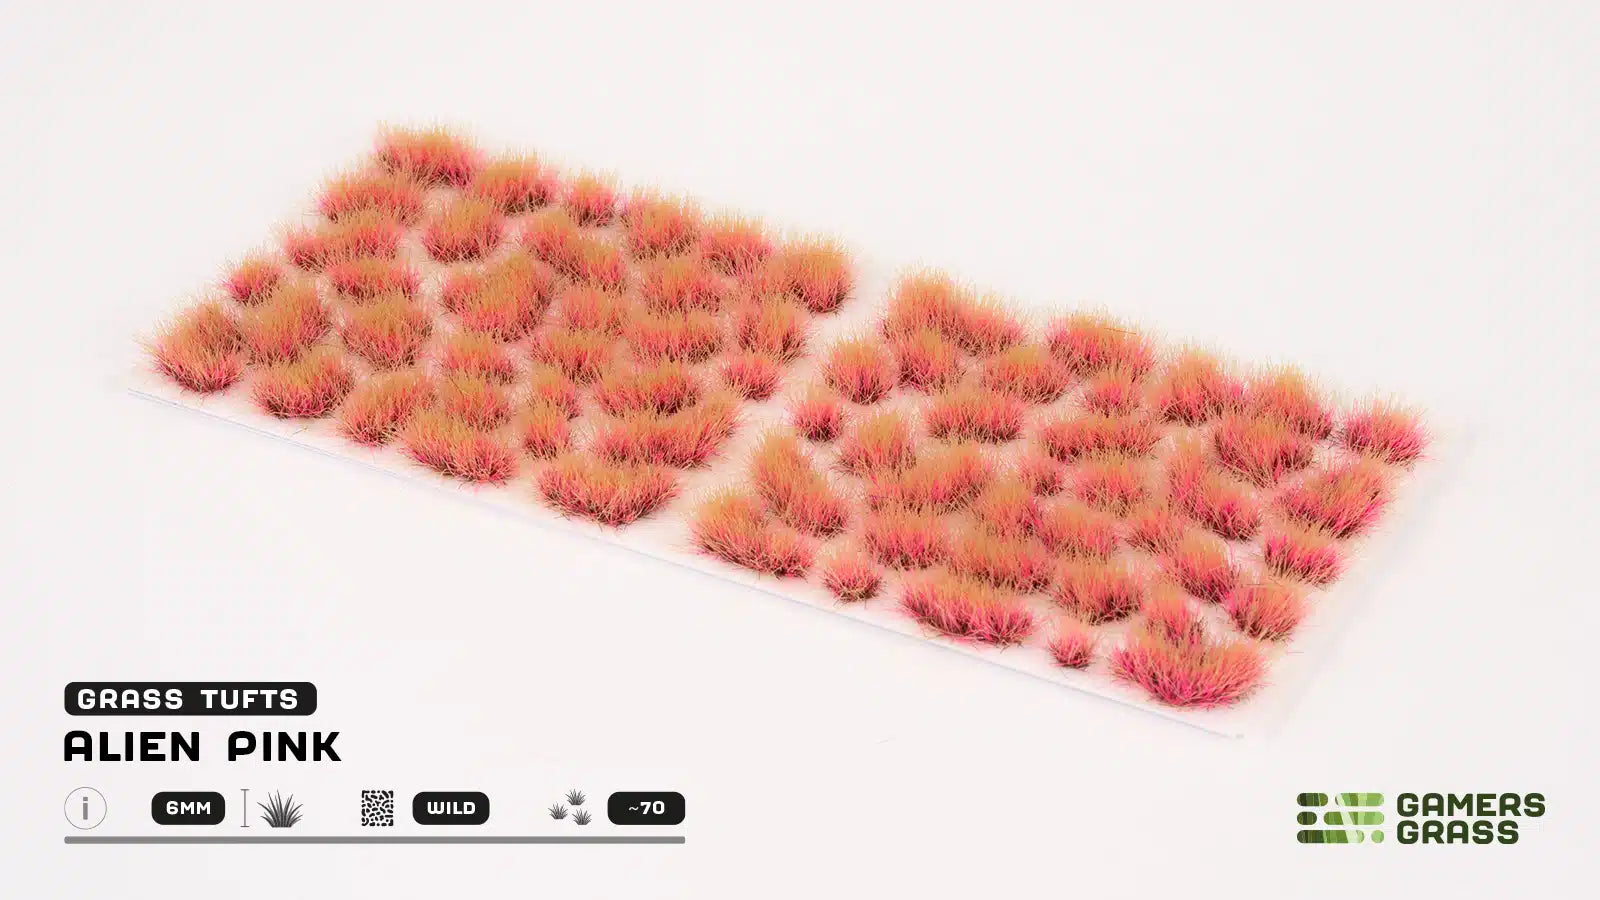 Alien Pink 6mm Tufts (Wild) - Gamers Grass - 0